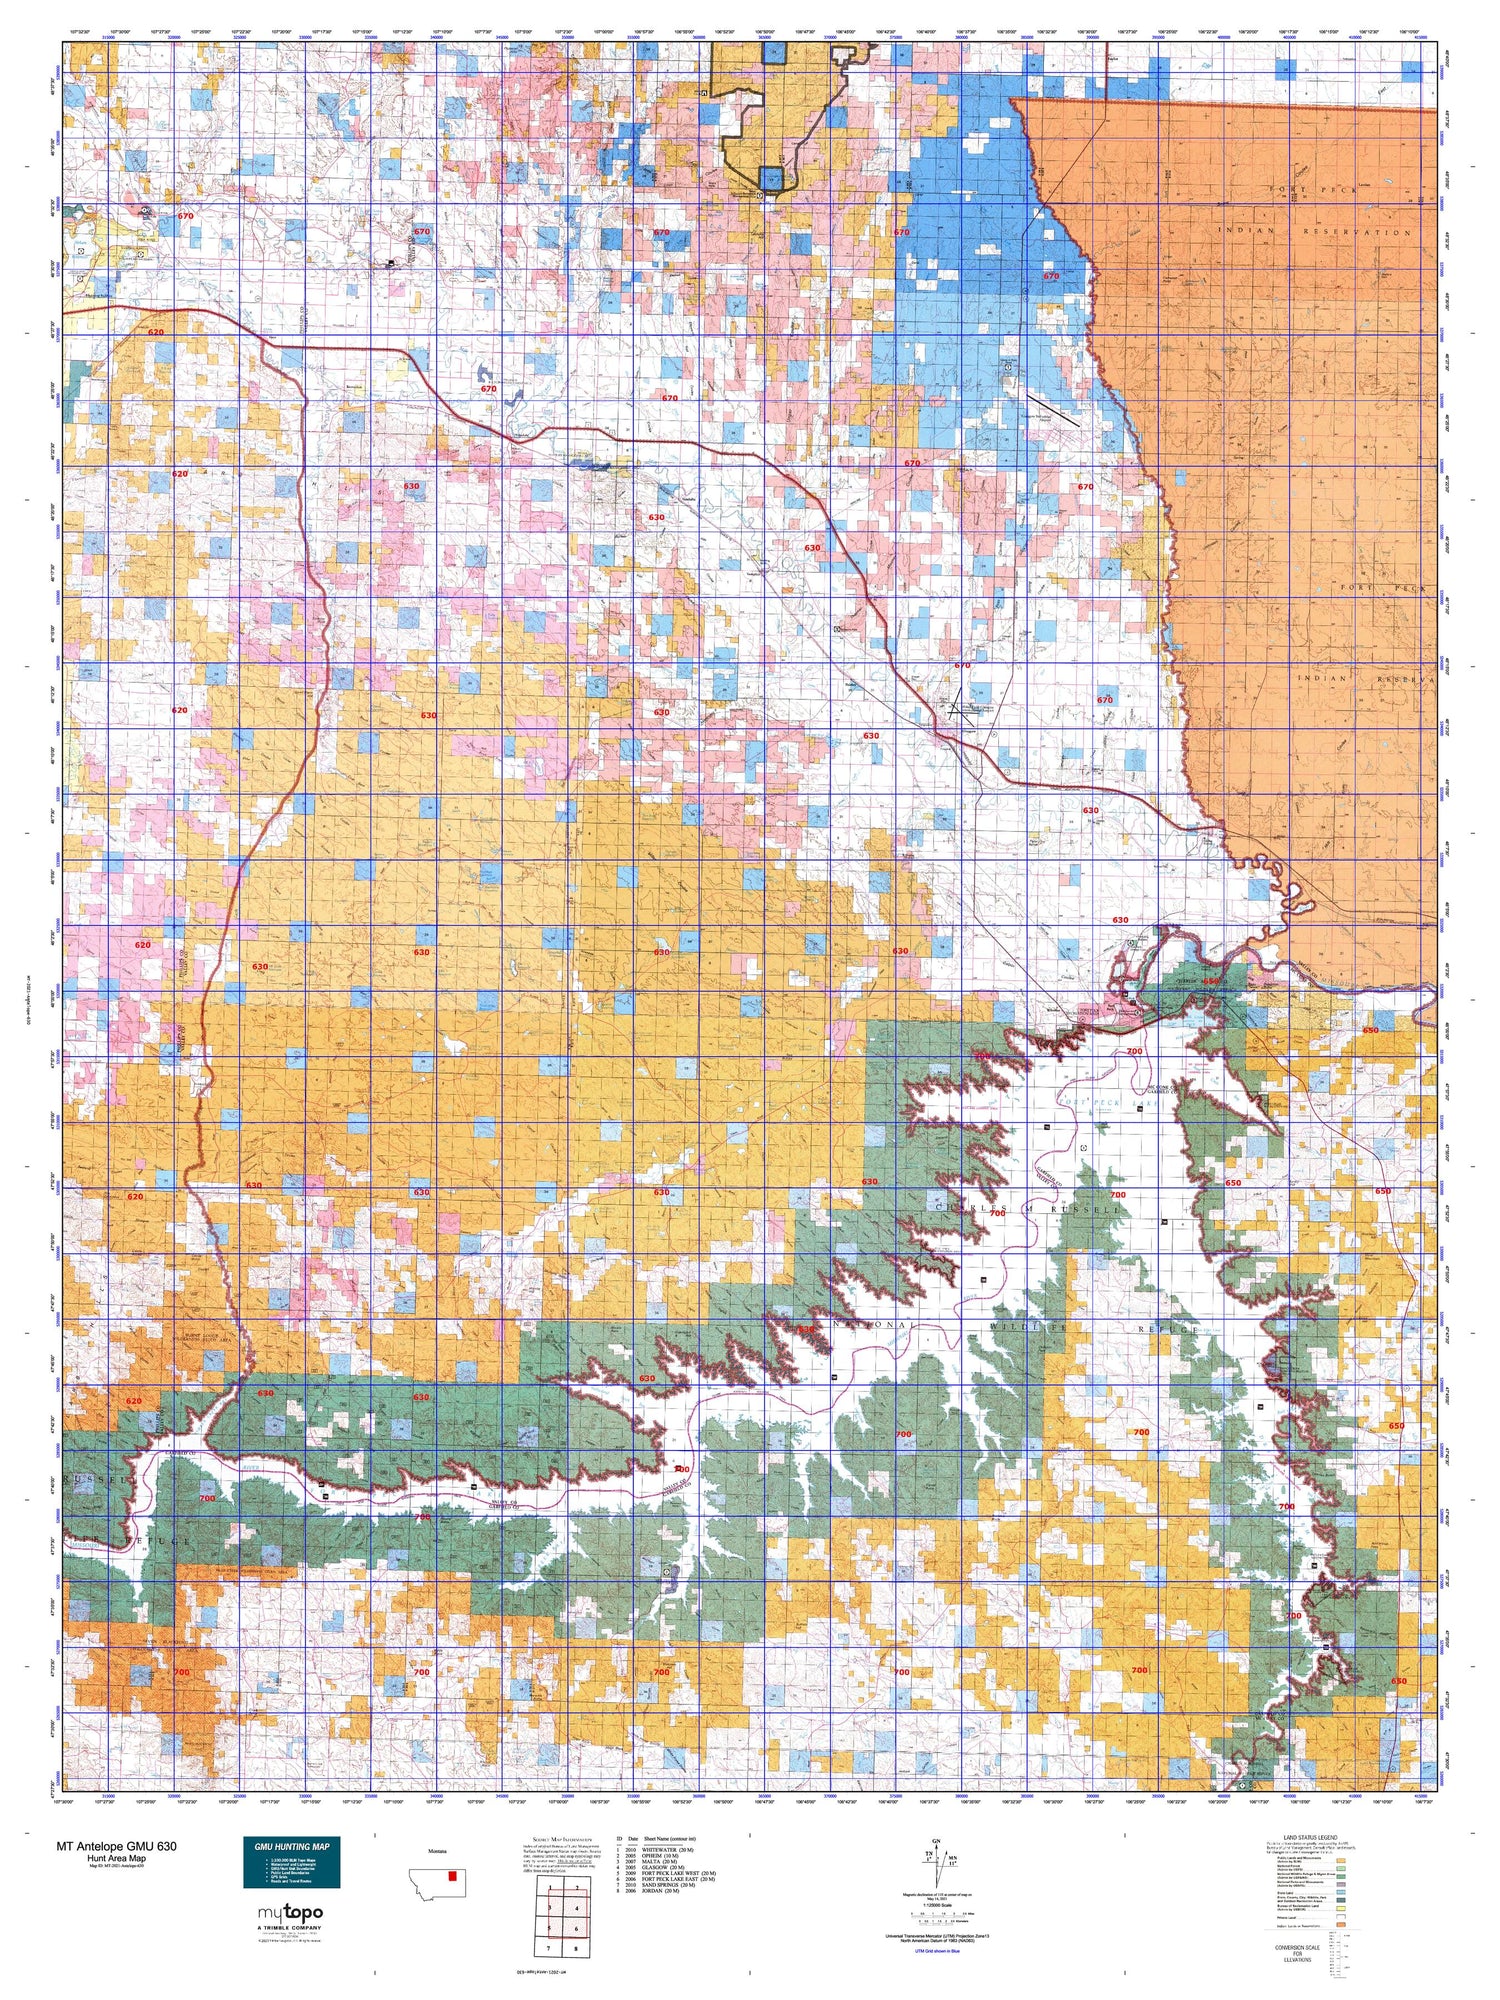 Montana Antelope GMU 630 Map Image